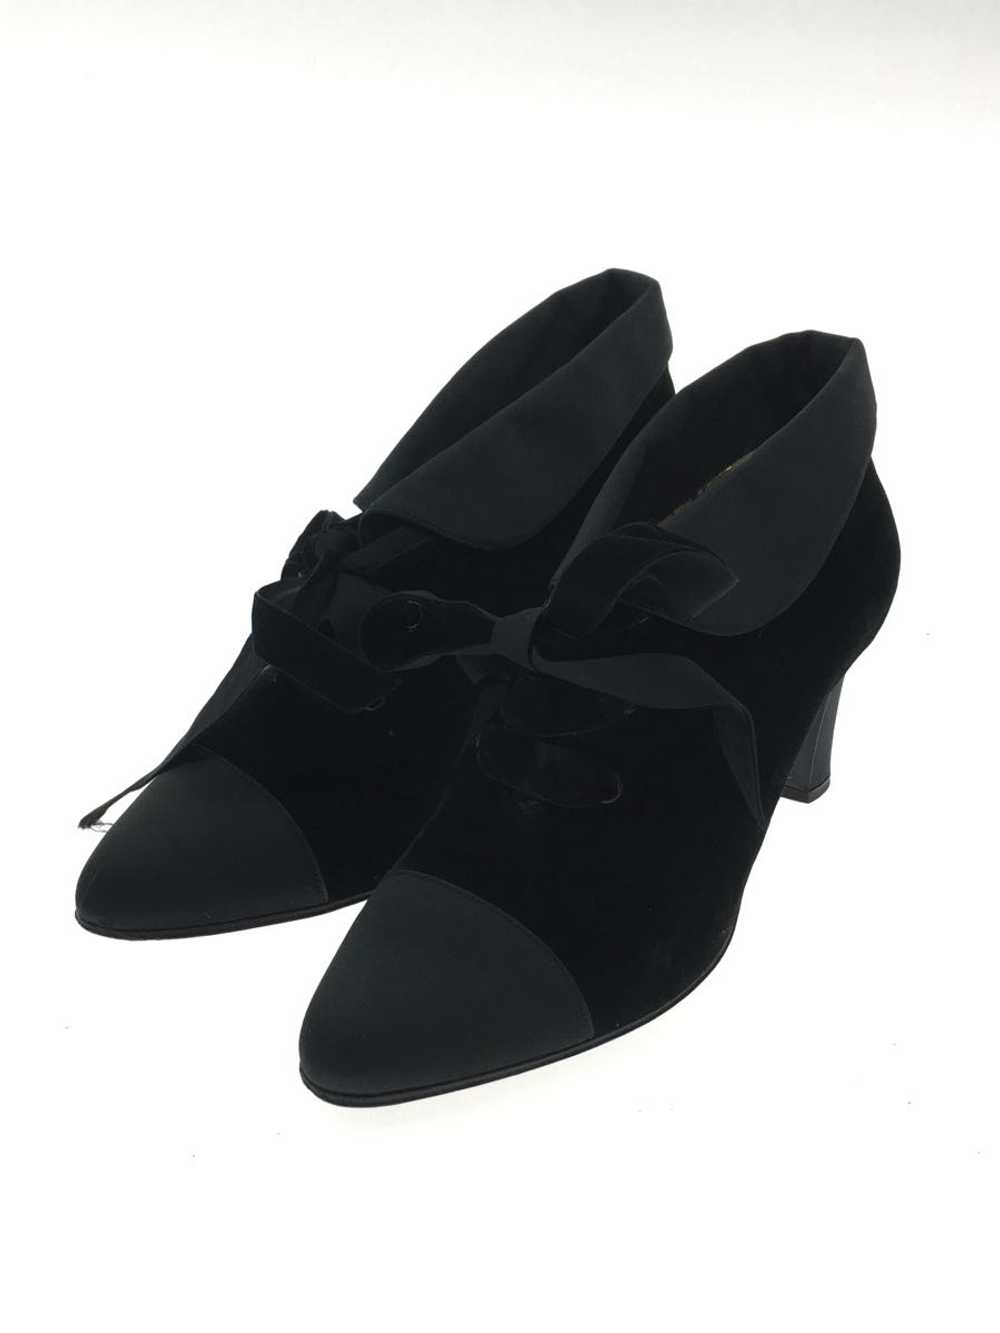 Chanel Pumps/36/Black/Suede Shoes Bbv86 - image 2